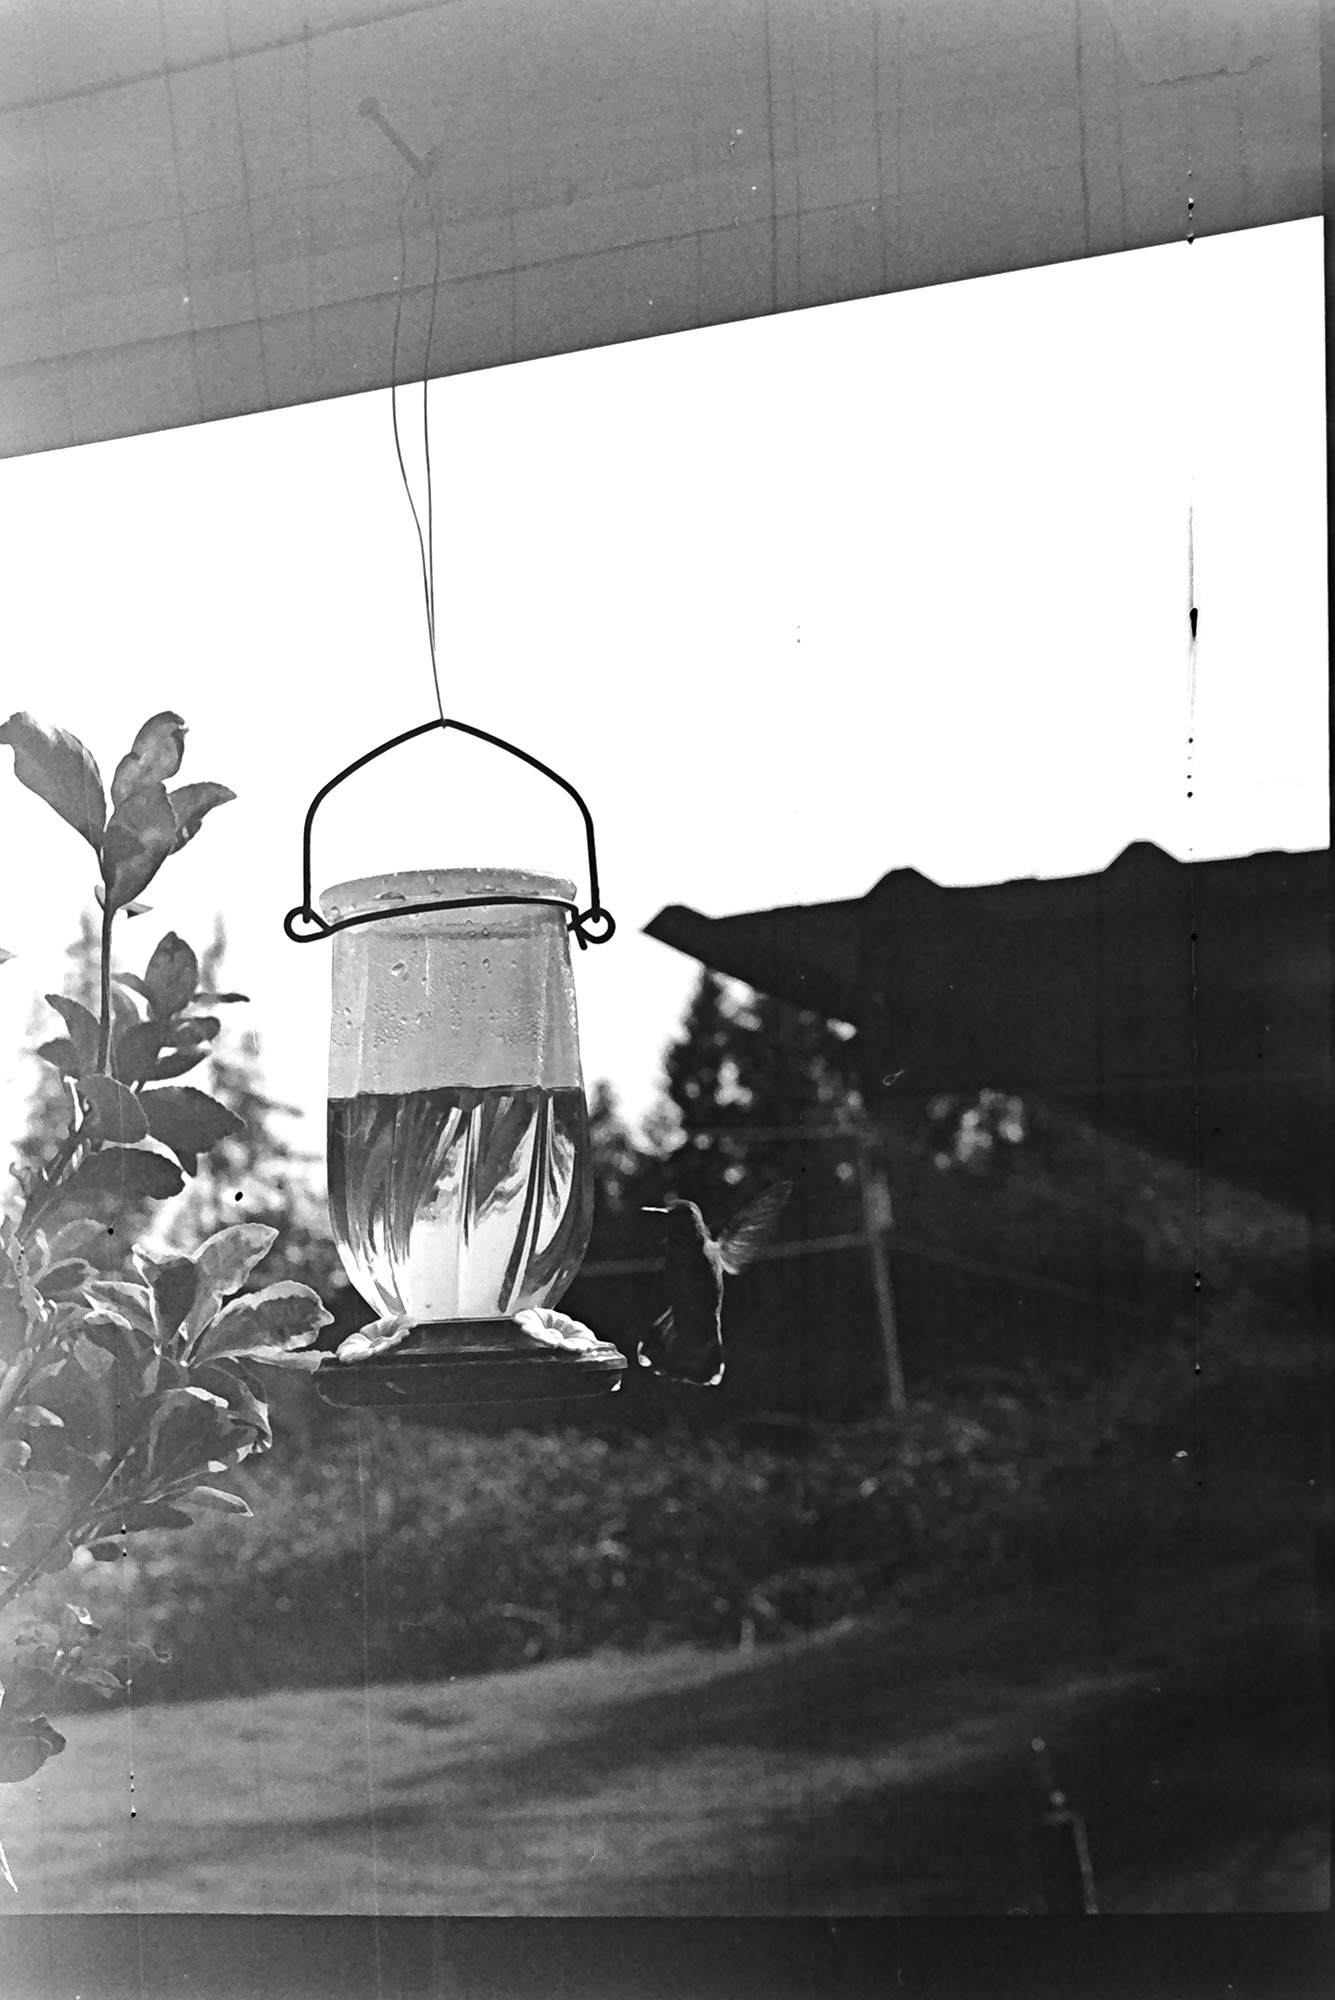 A hummingbird hovering near a feeder